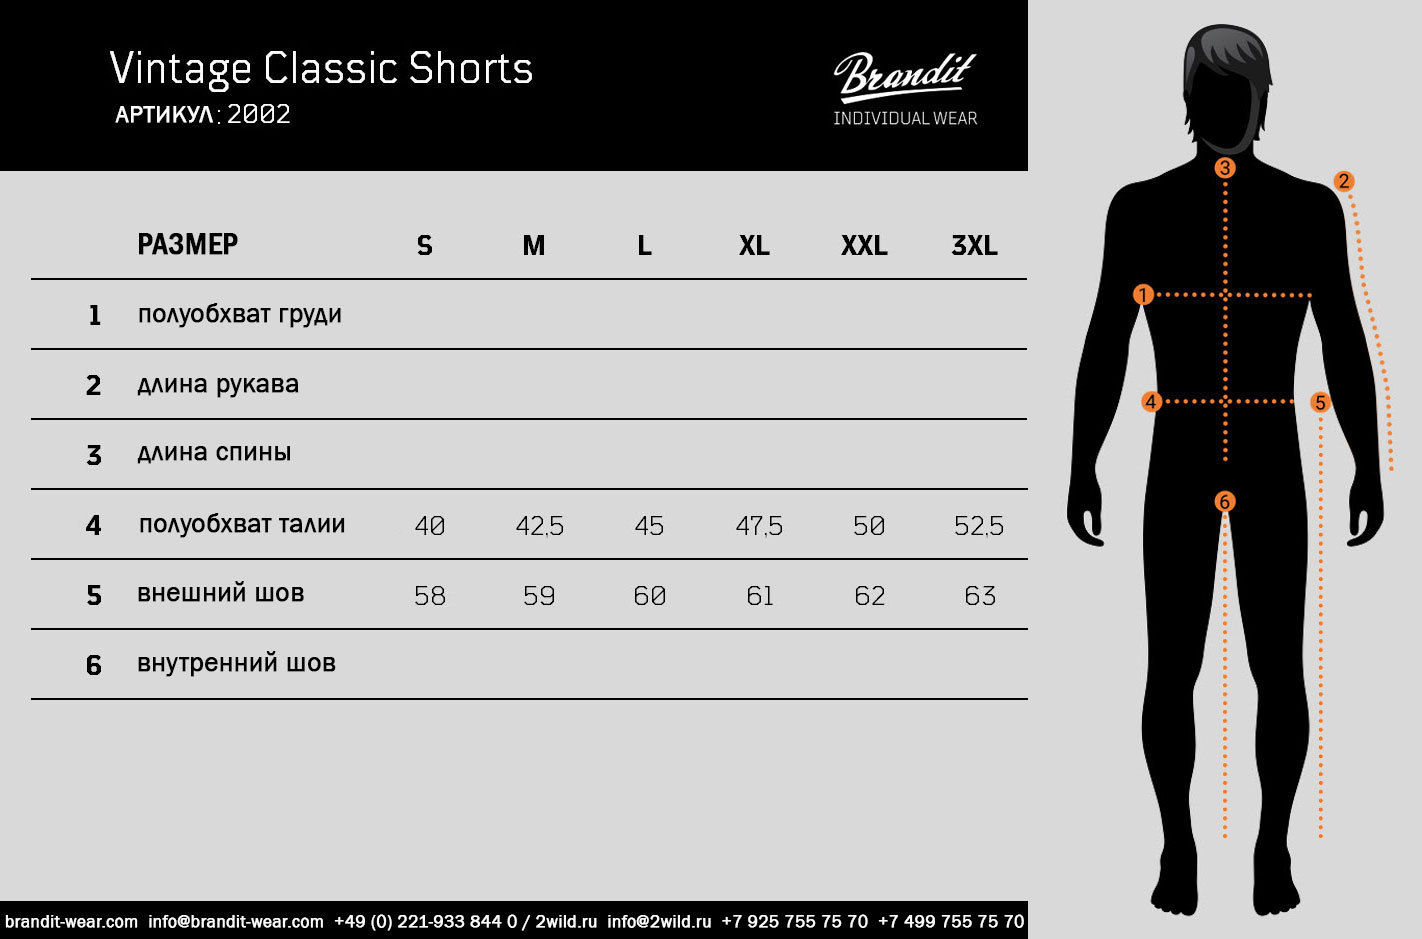 Шорты Brandit Vintage Classic Shorts размеры